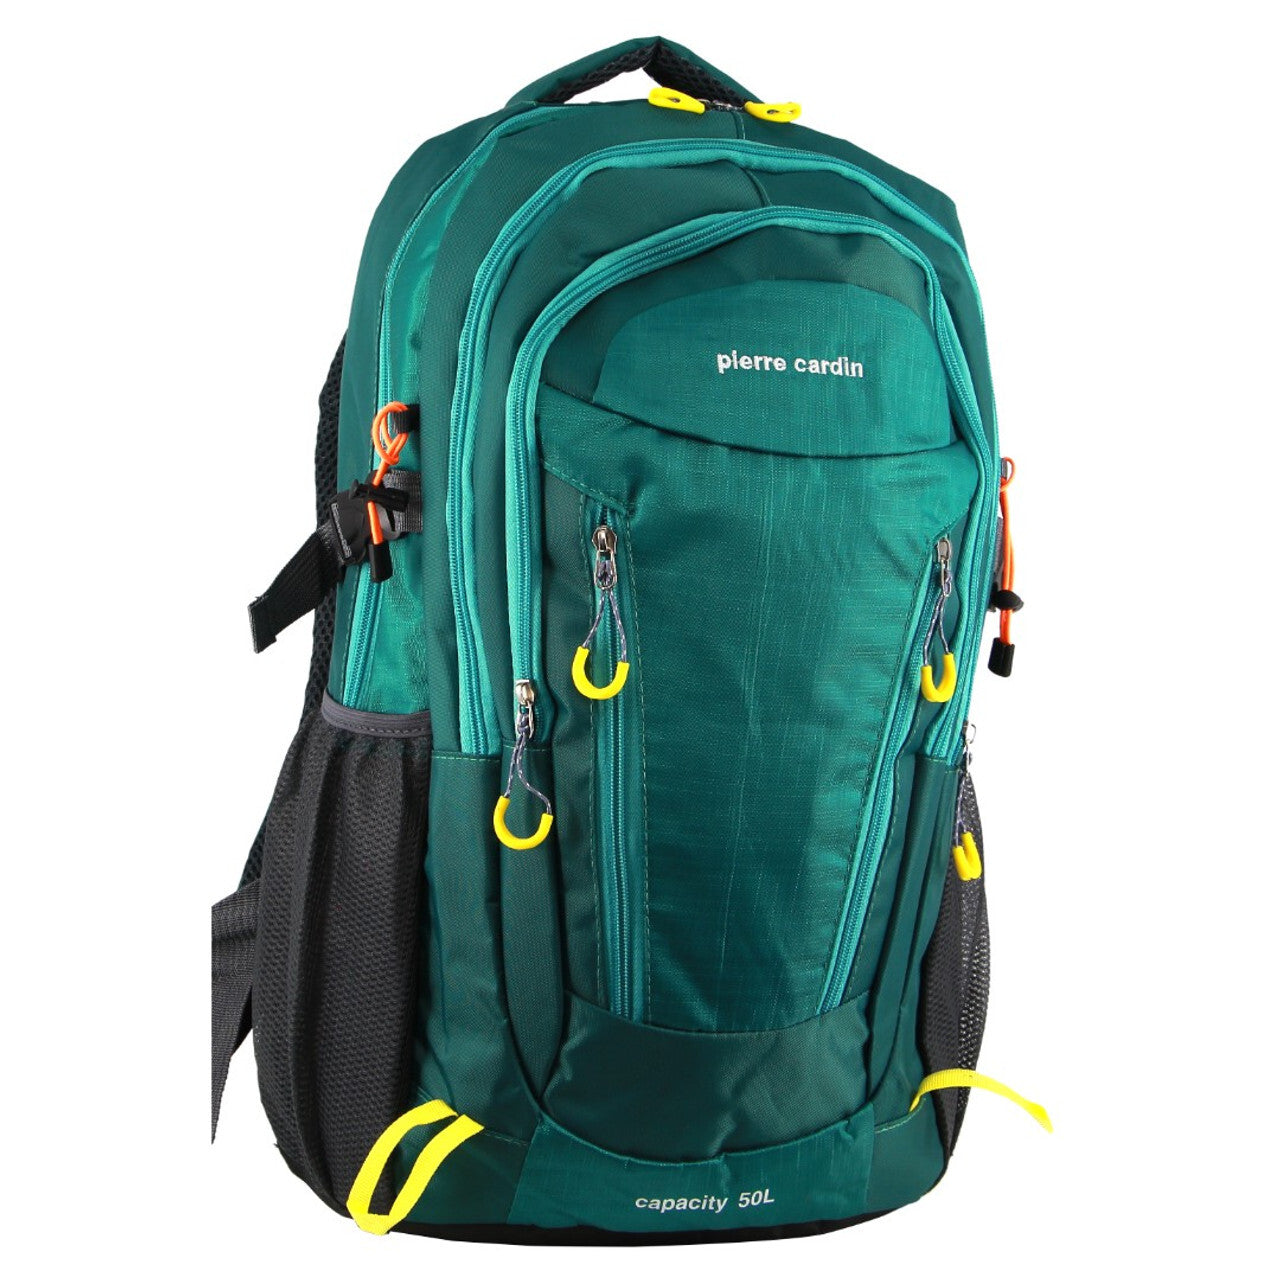 Mens Backpack Bag RFID Pocket Nylon Travel Sport Large - Green